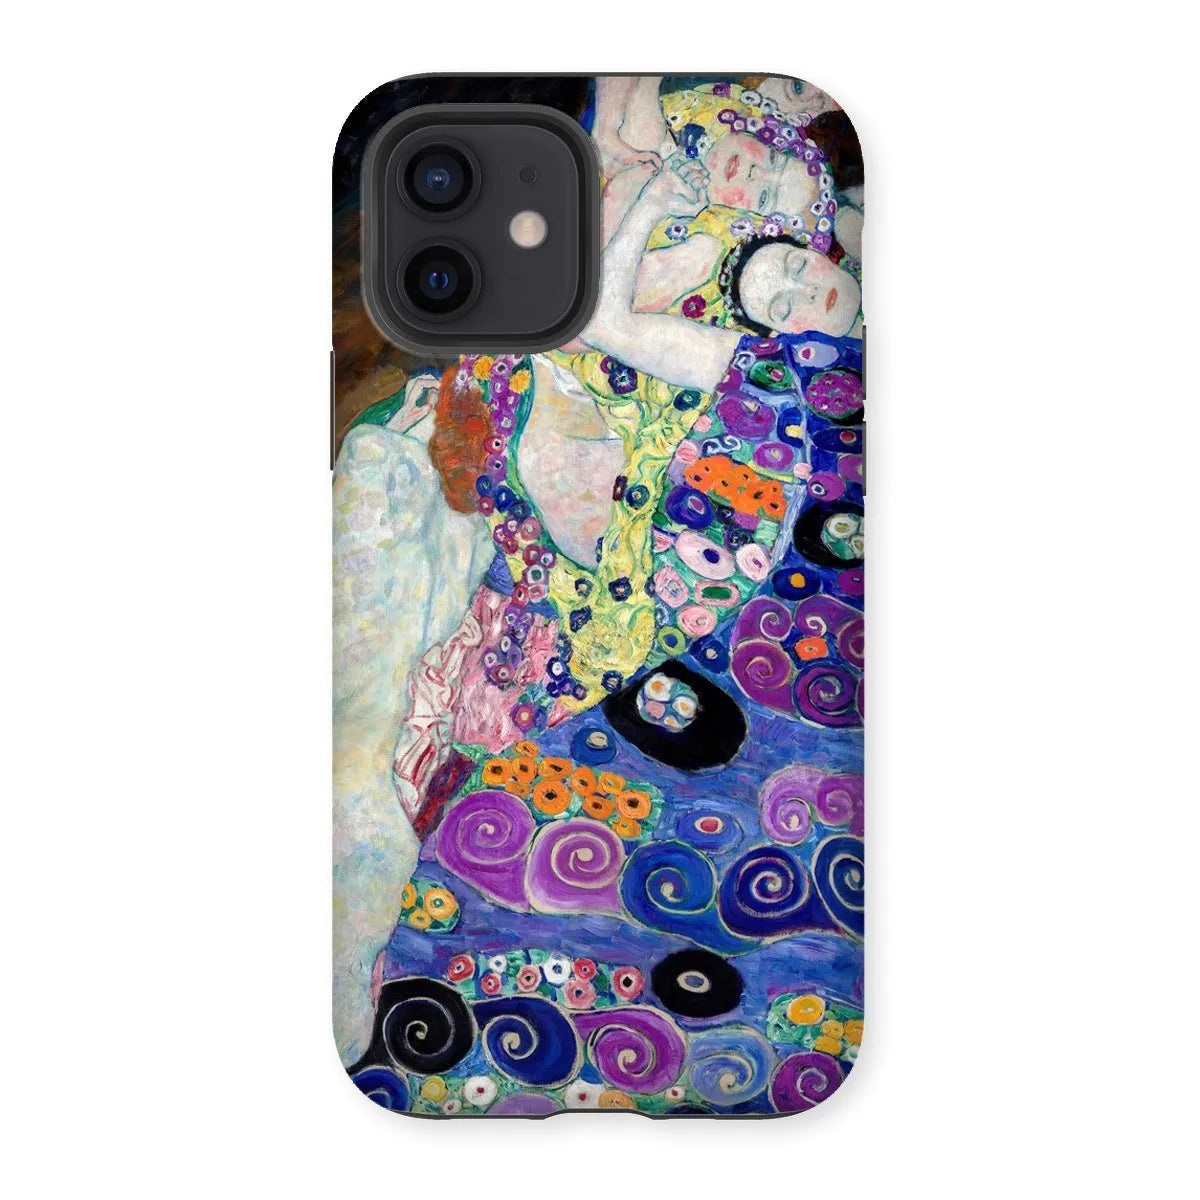 The Virgin - Vienna Secession Phone Case - Gustav Klimt - Iphone 12 / Matte - Mobile Phone Cases - Aesthetic Art